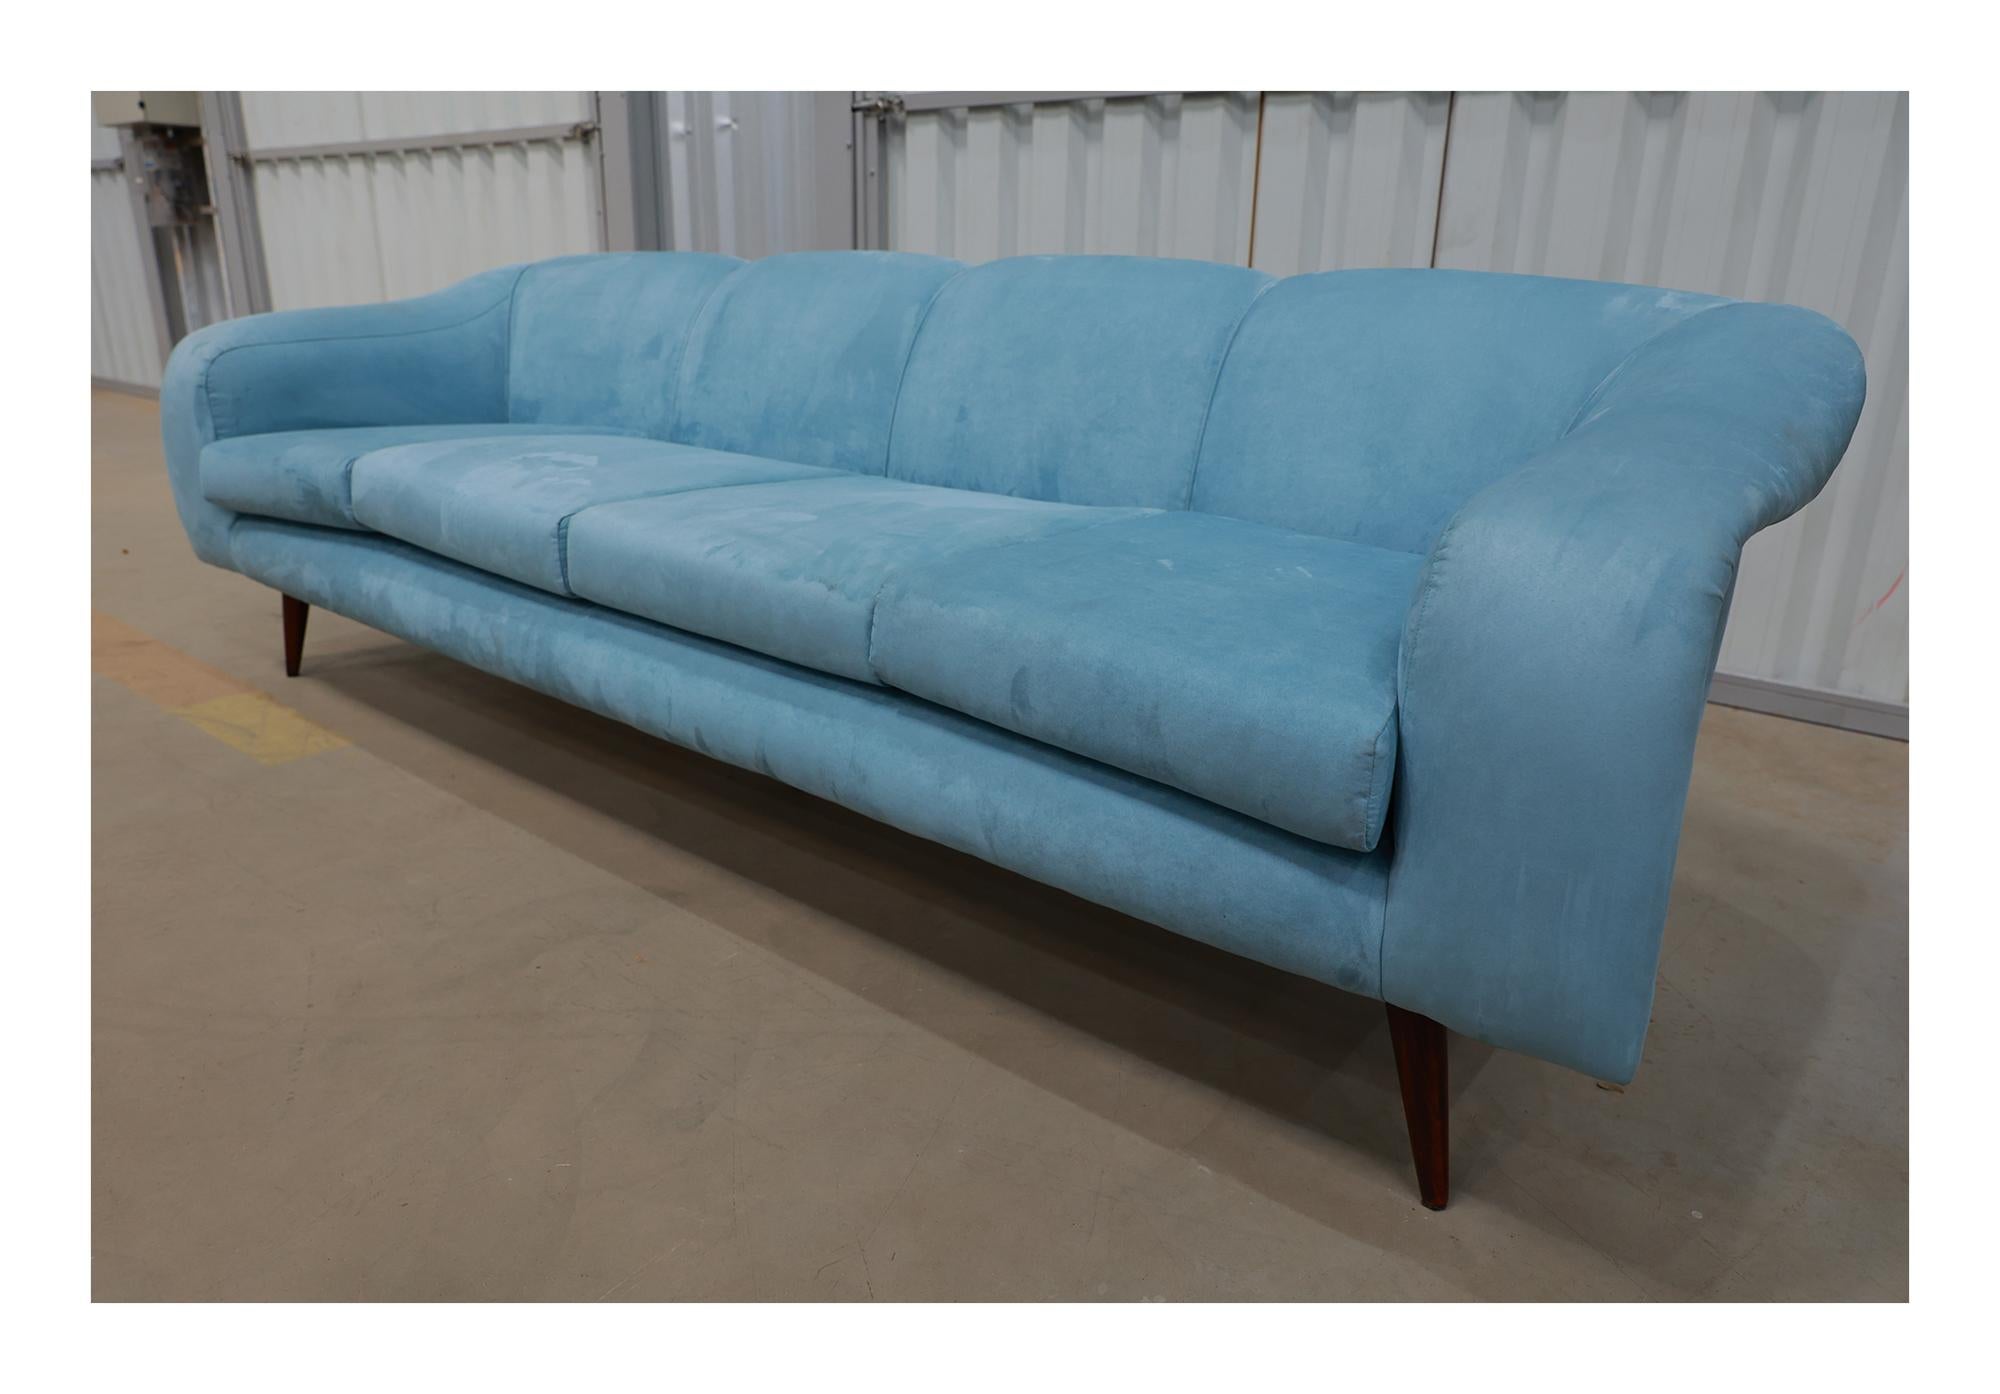 20th Century Brazilian Modern Sofa in Hardwood & Light Blue Fabric, Joaquim Tenreiro, c. 1960 For Sale